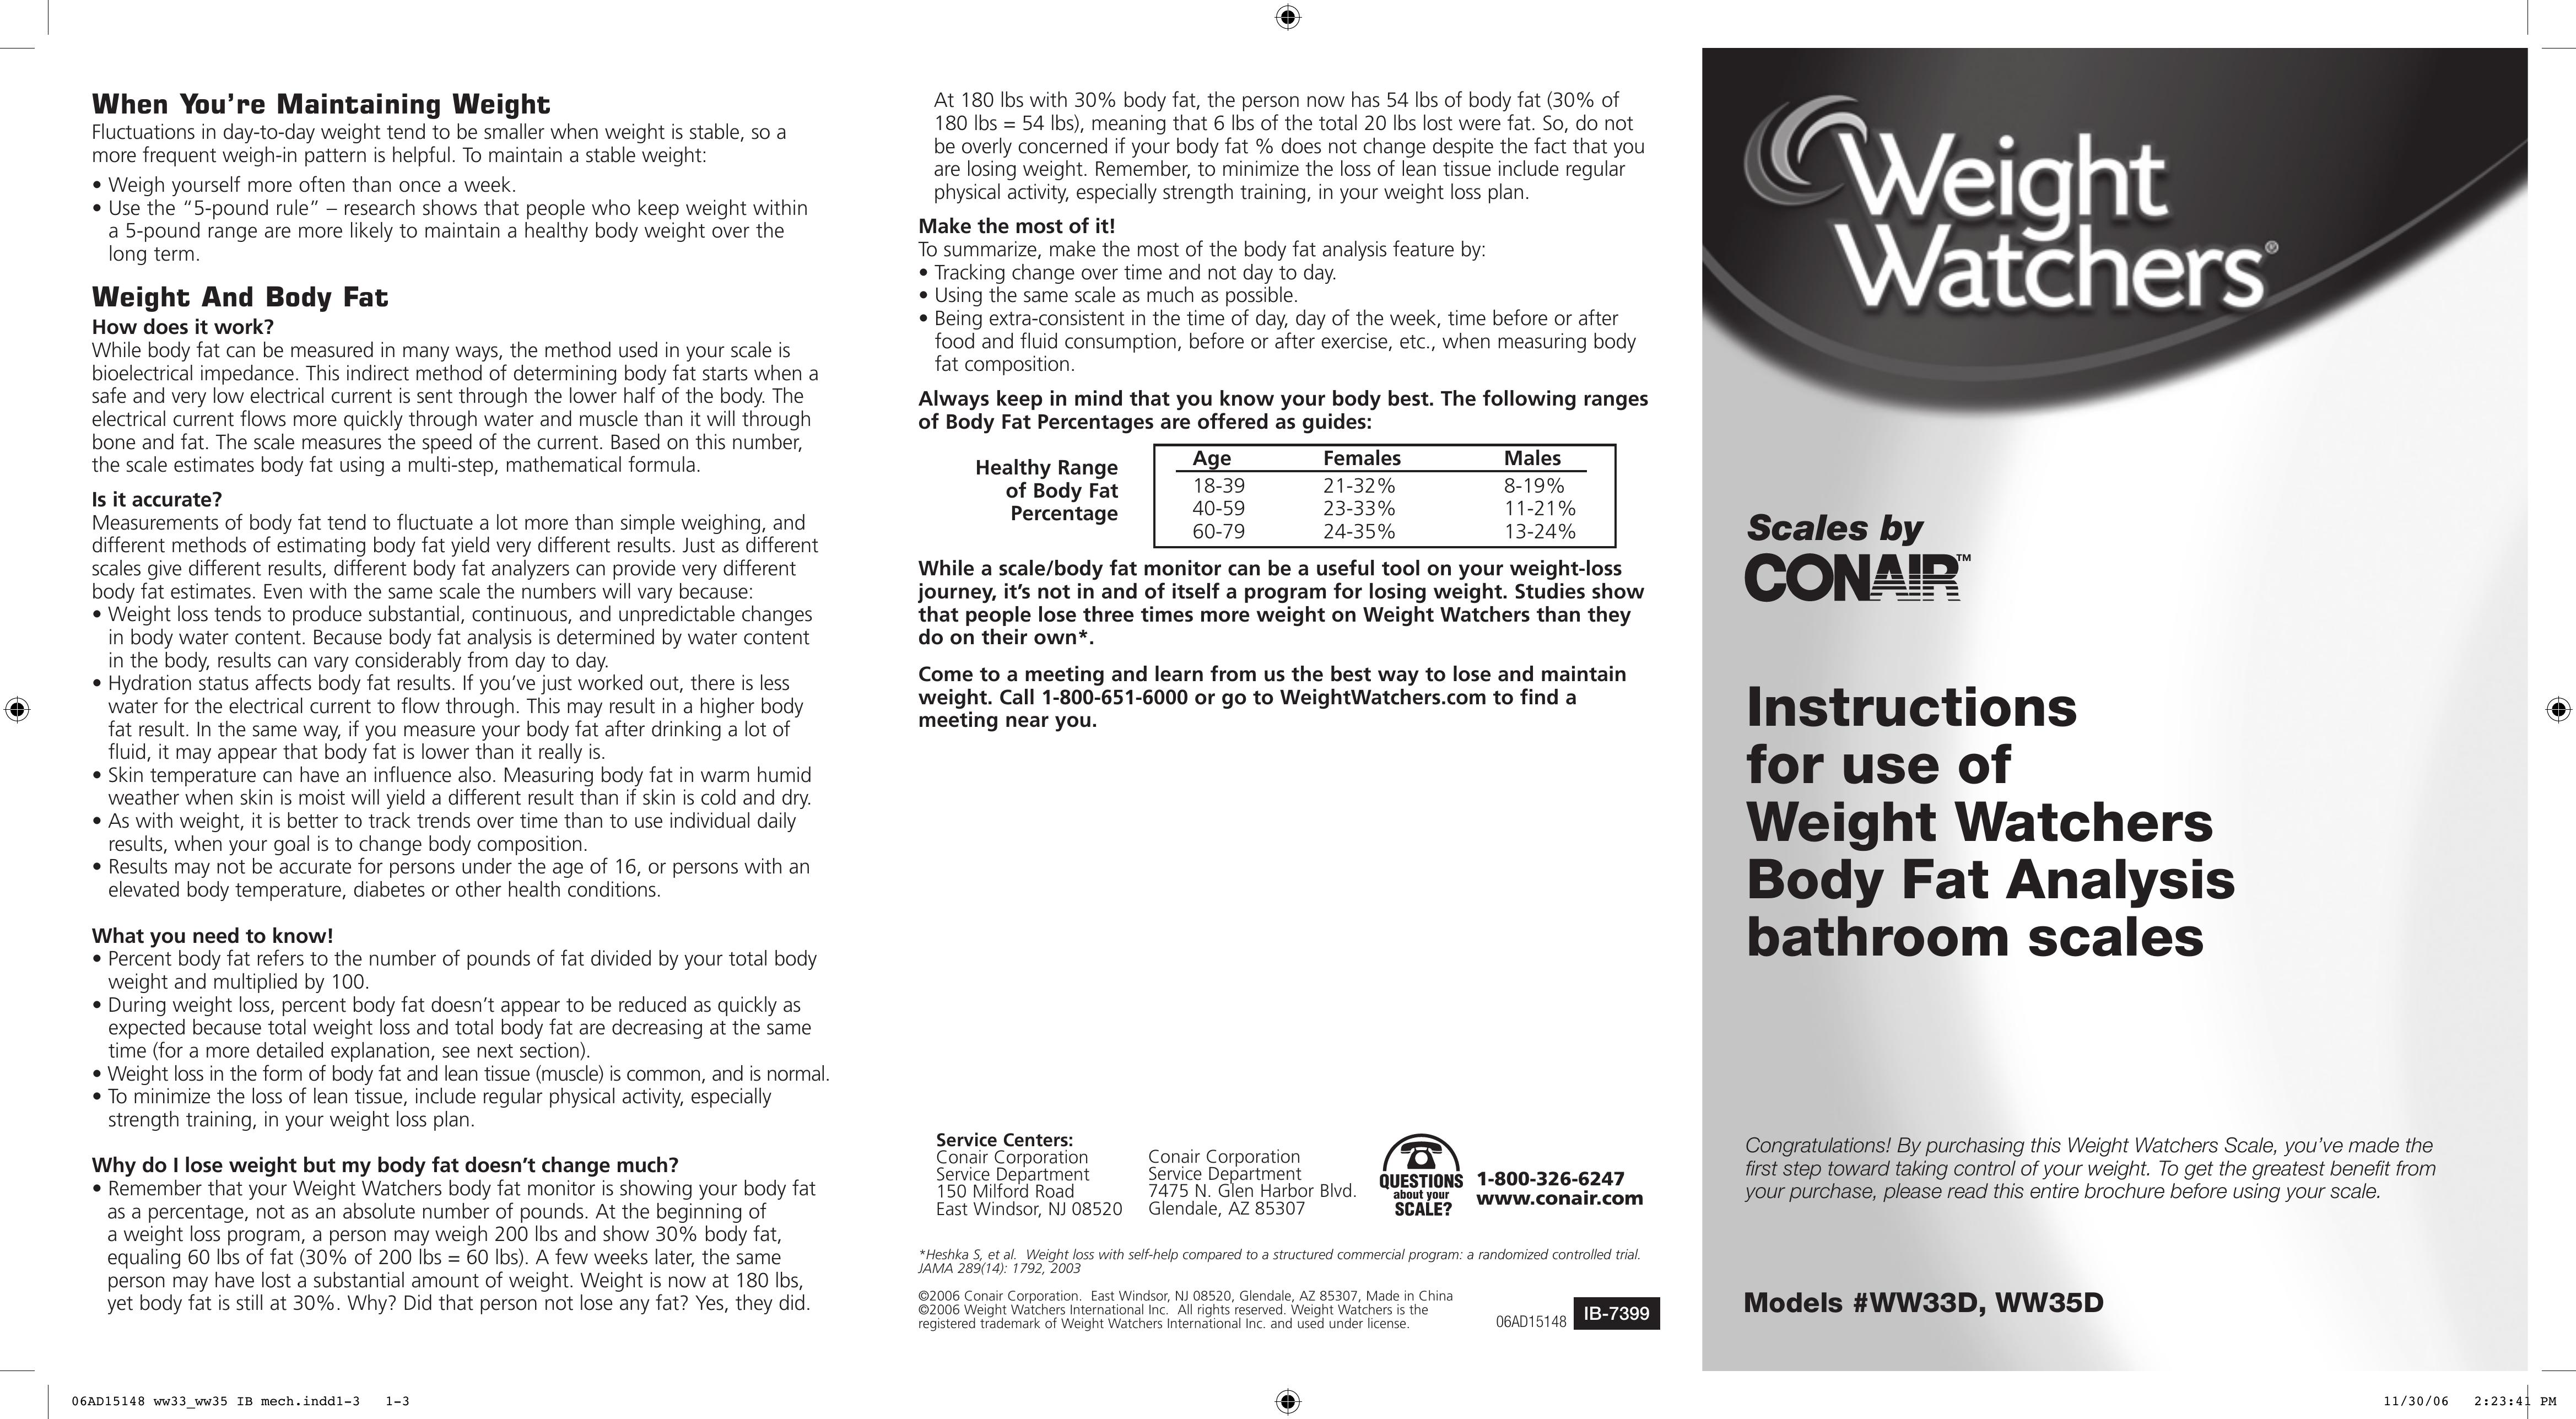 Conair WW33D Scale User Manual